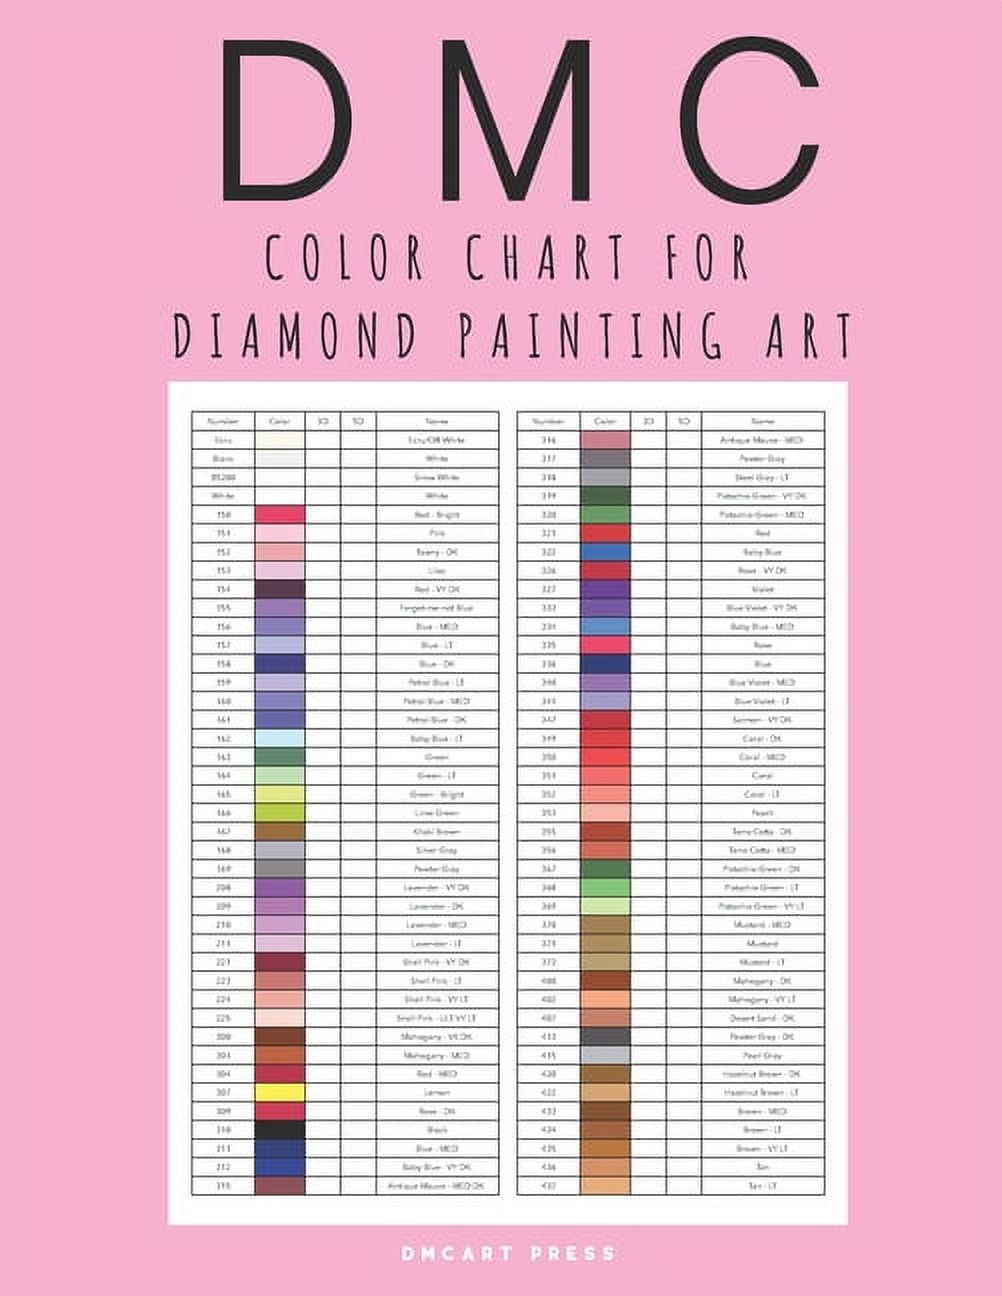 DMC Color Chart for Diamond Painting Art : Complete DMC Color Card